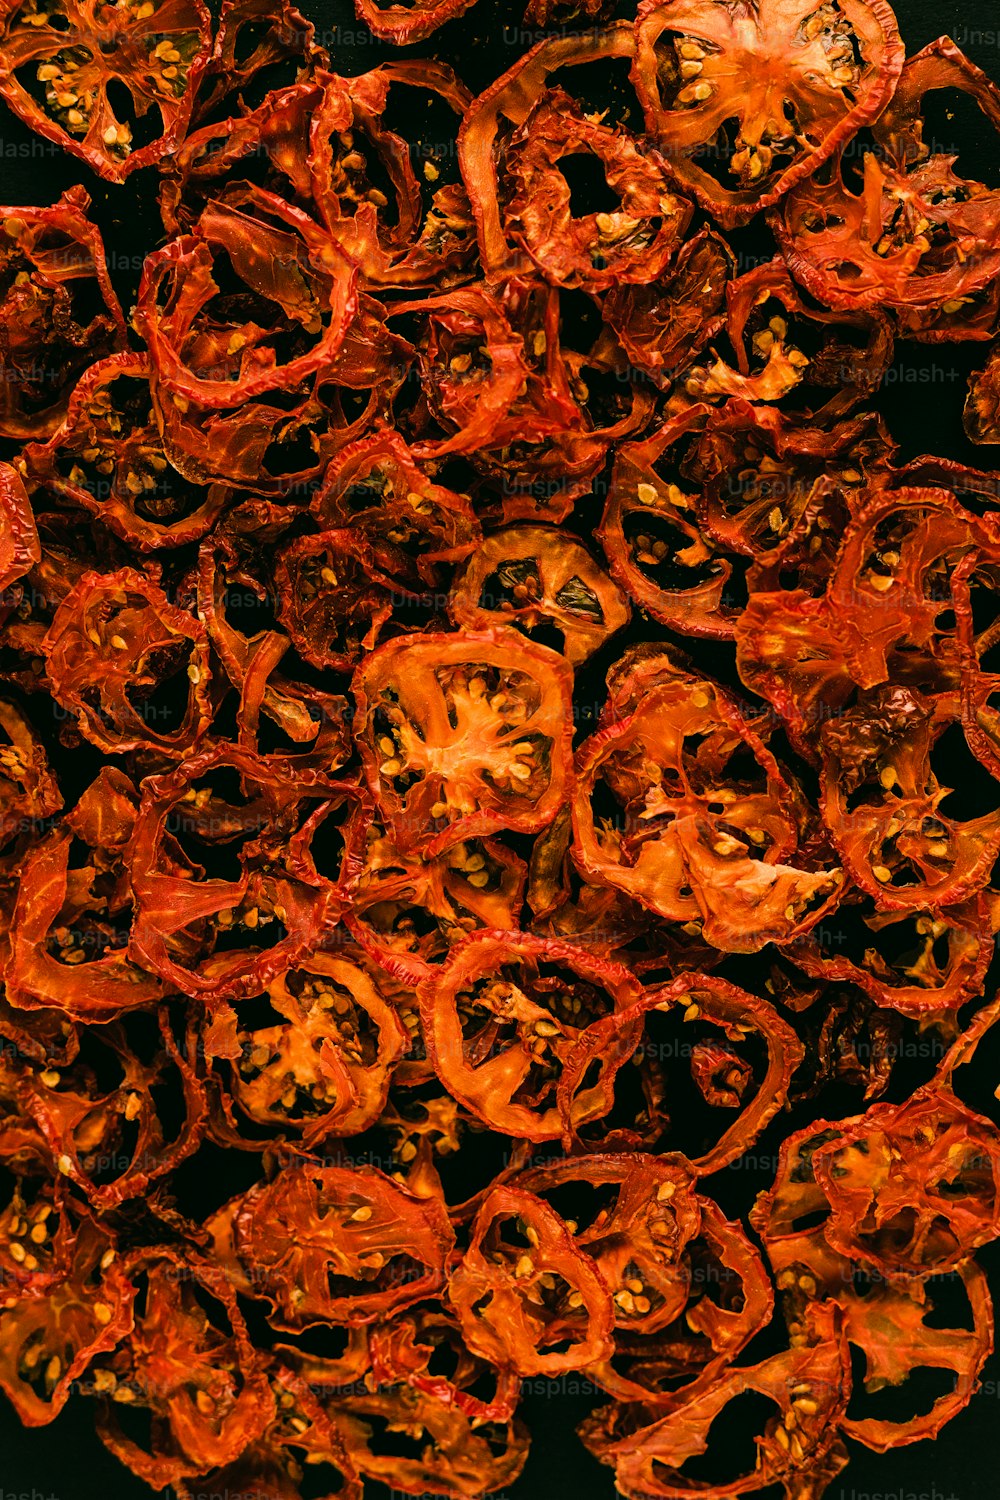 un mucchio di peperoni rossi essiccati su una superficie nera